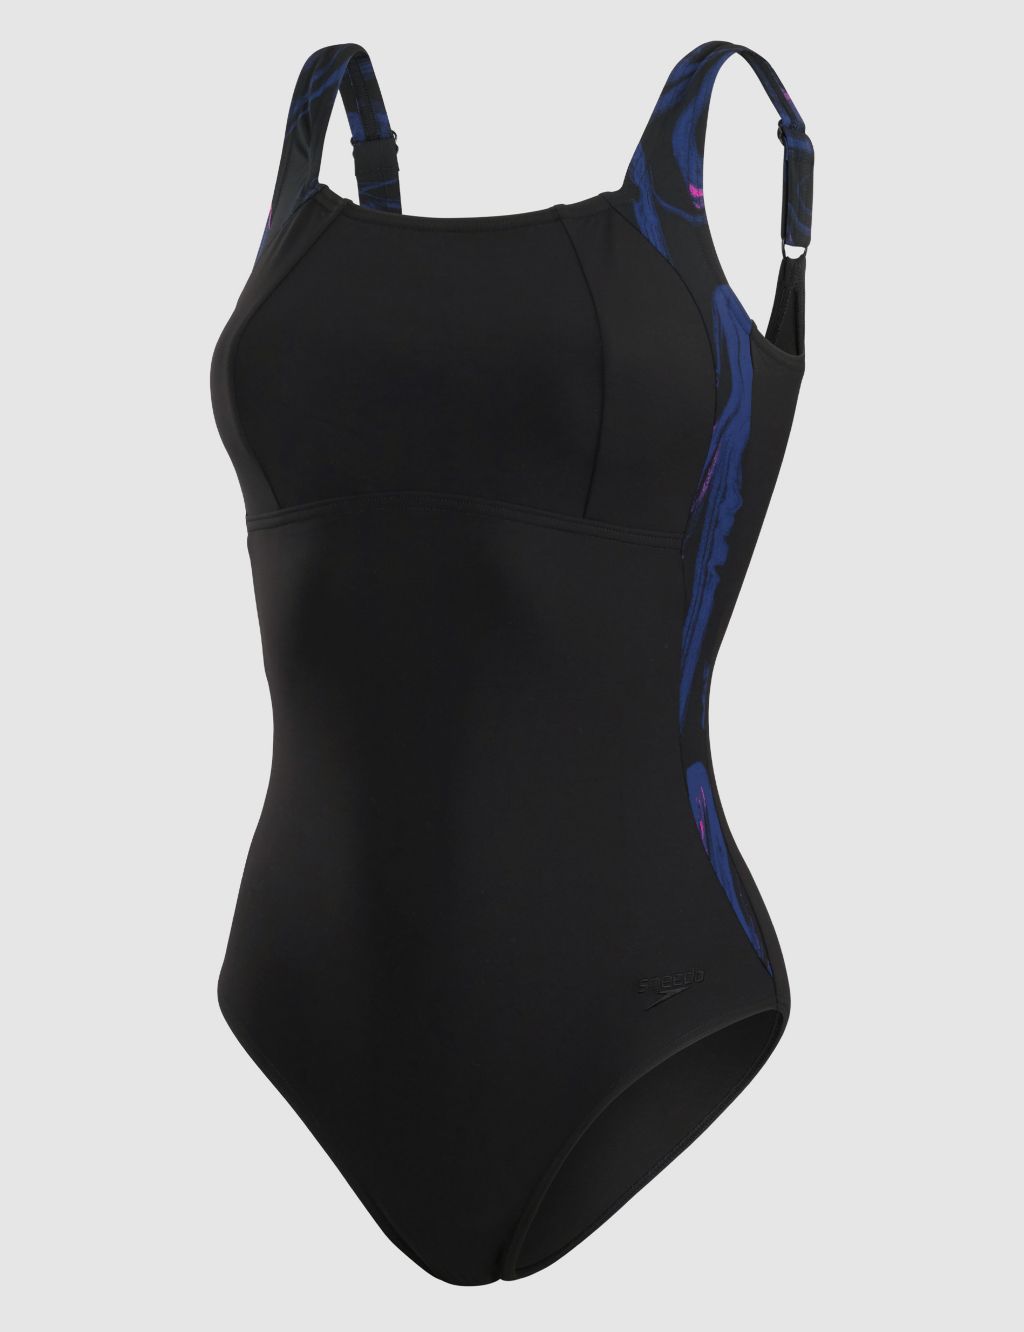 Speedo - Women's Swimsuit Shaping Plus Size Printed OrchidLustre